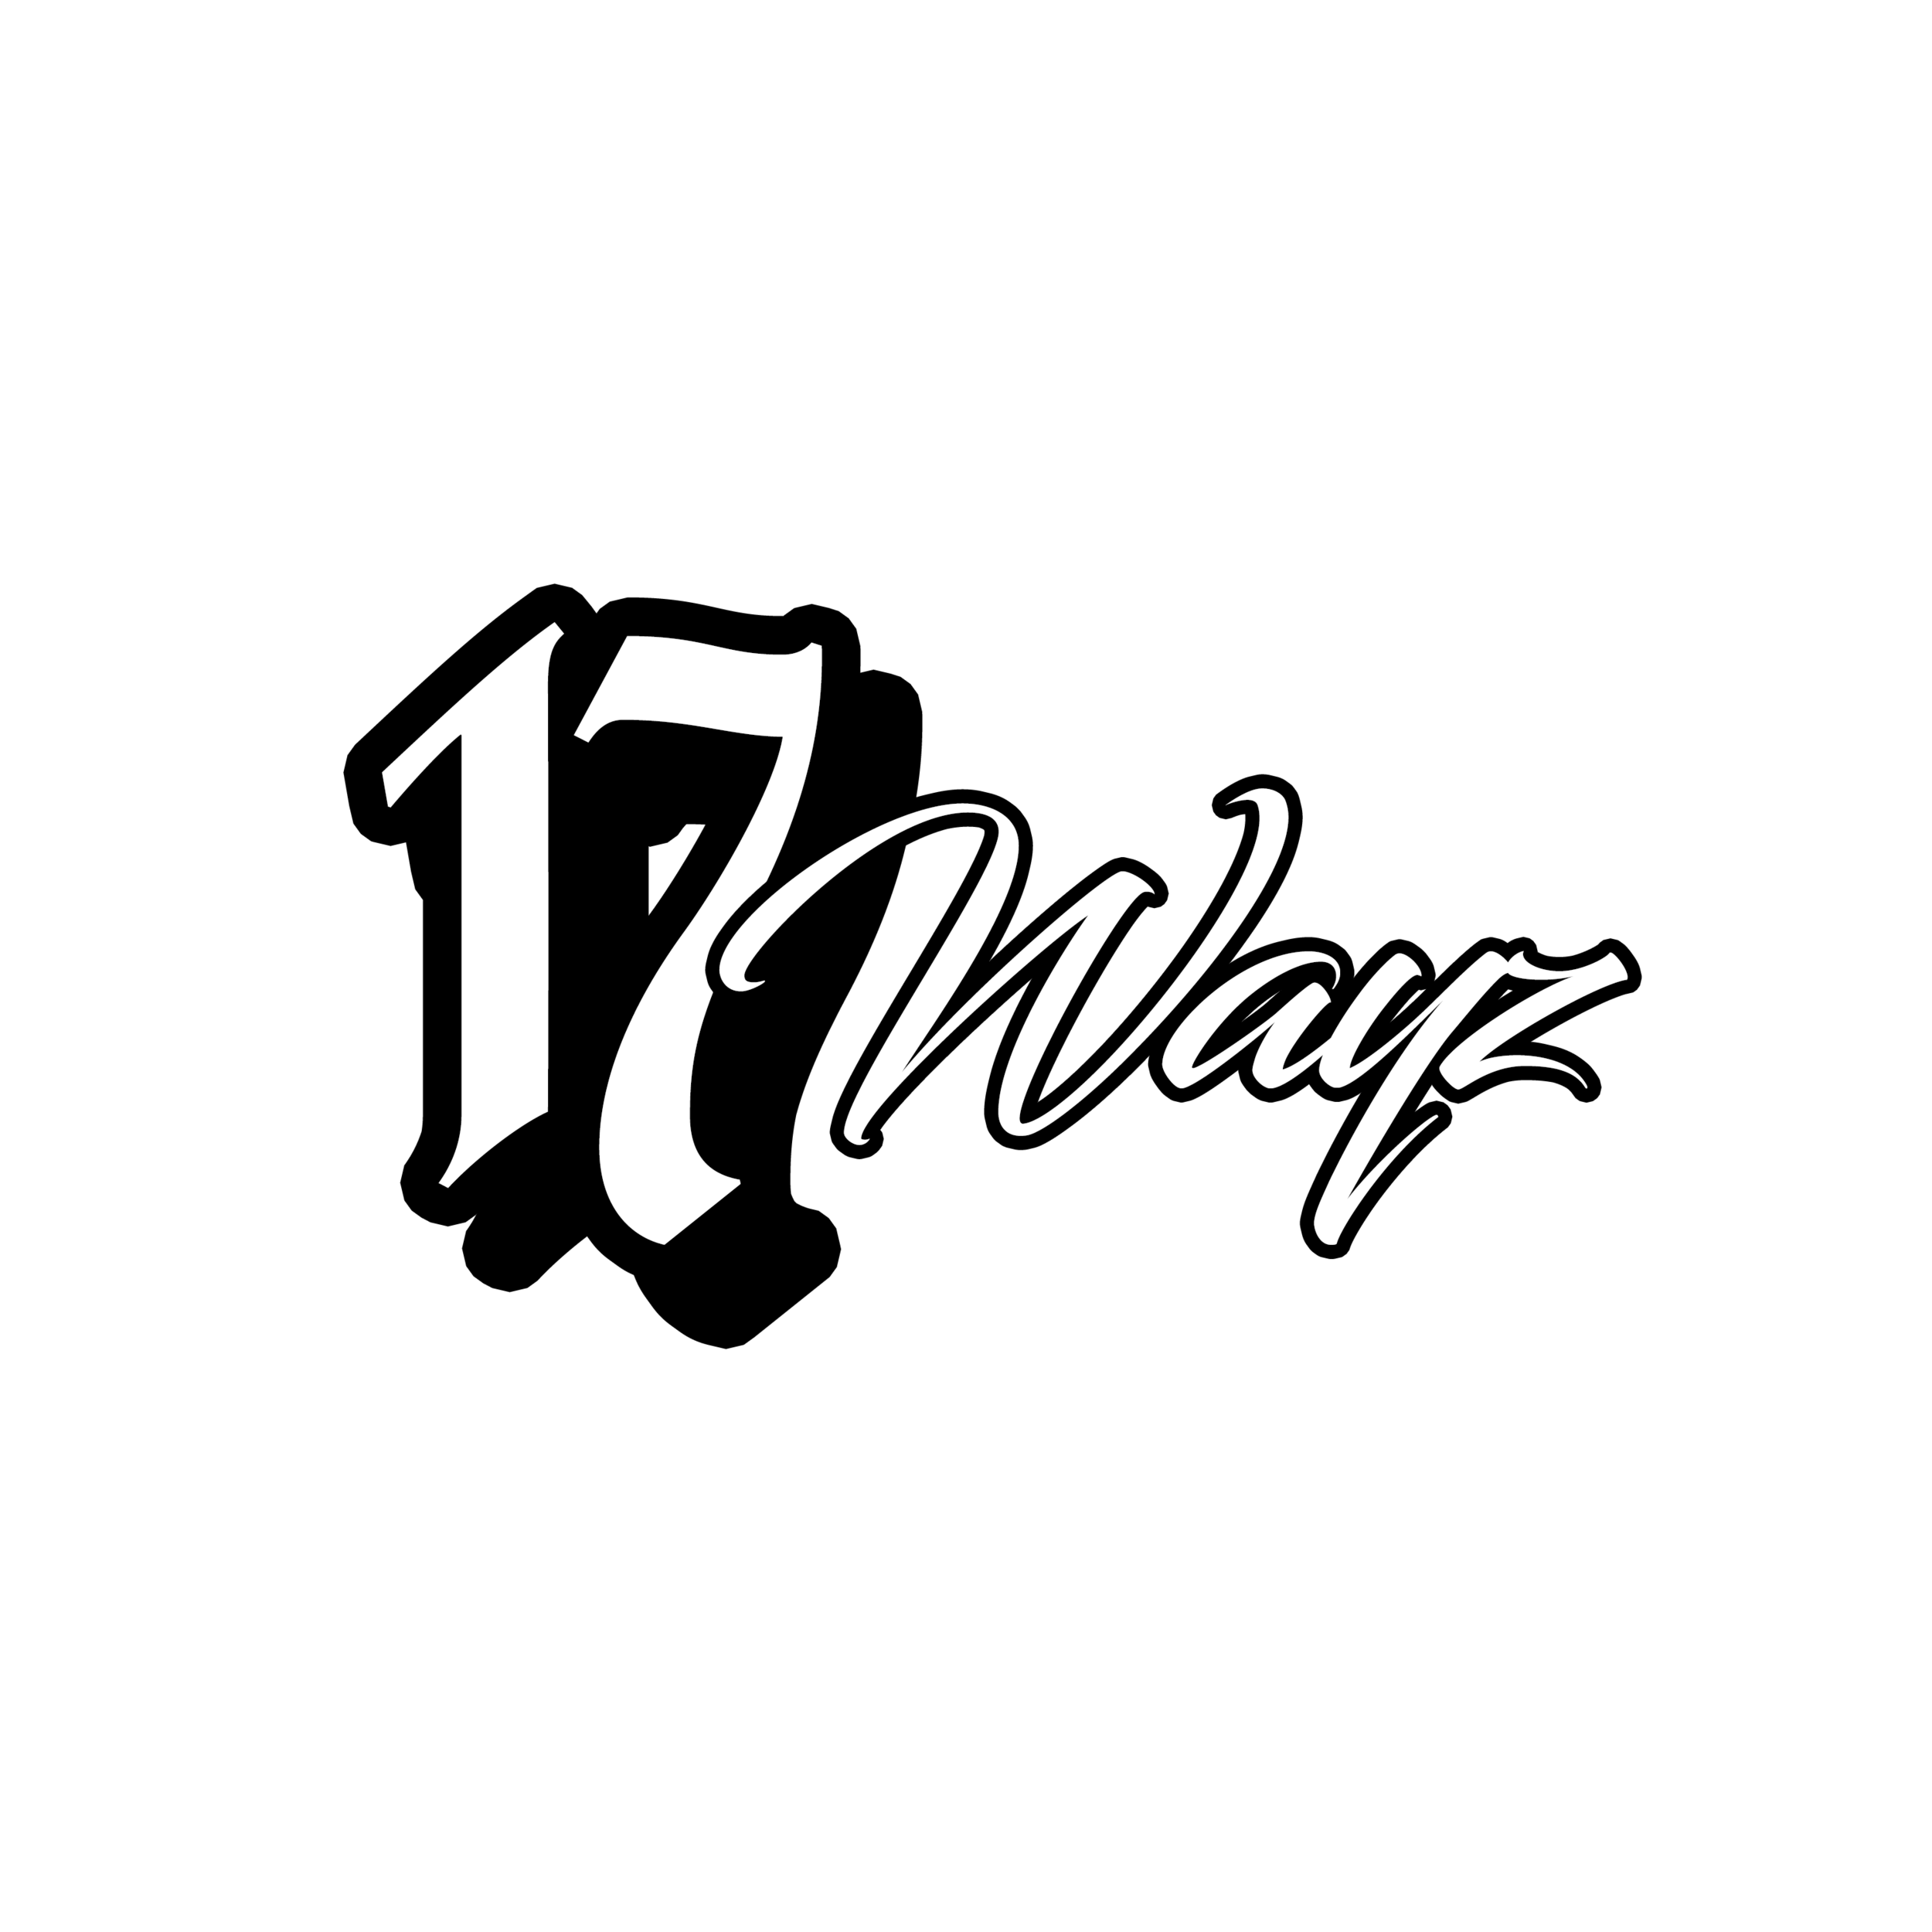 17 ways2.png